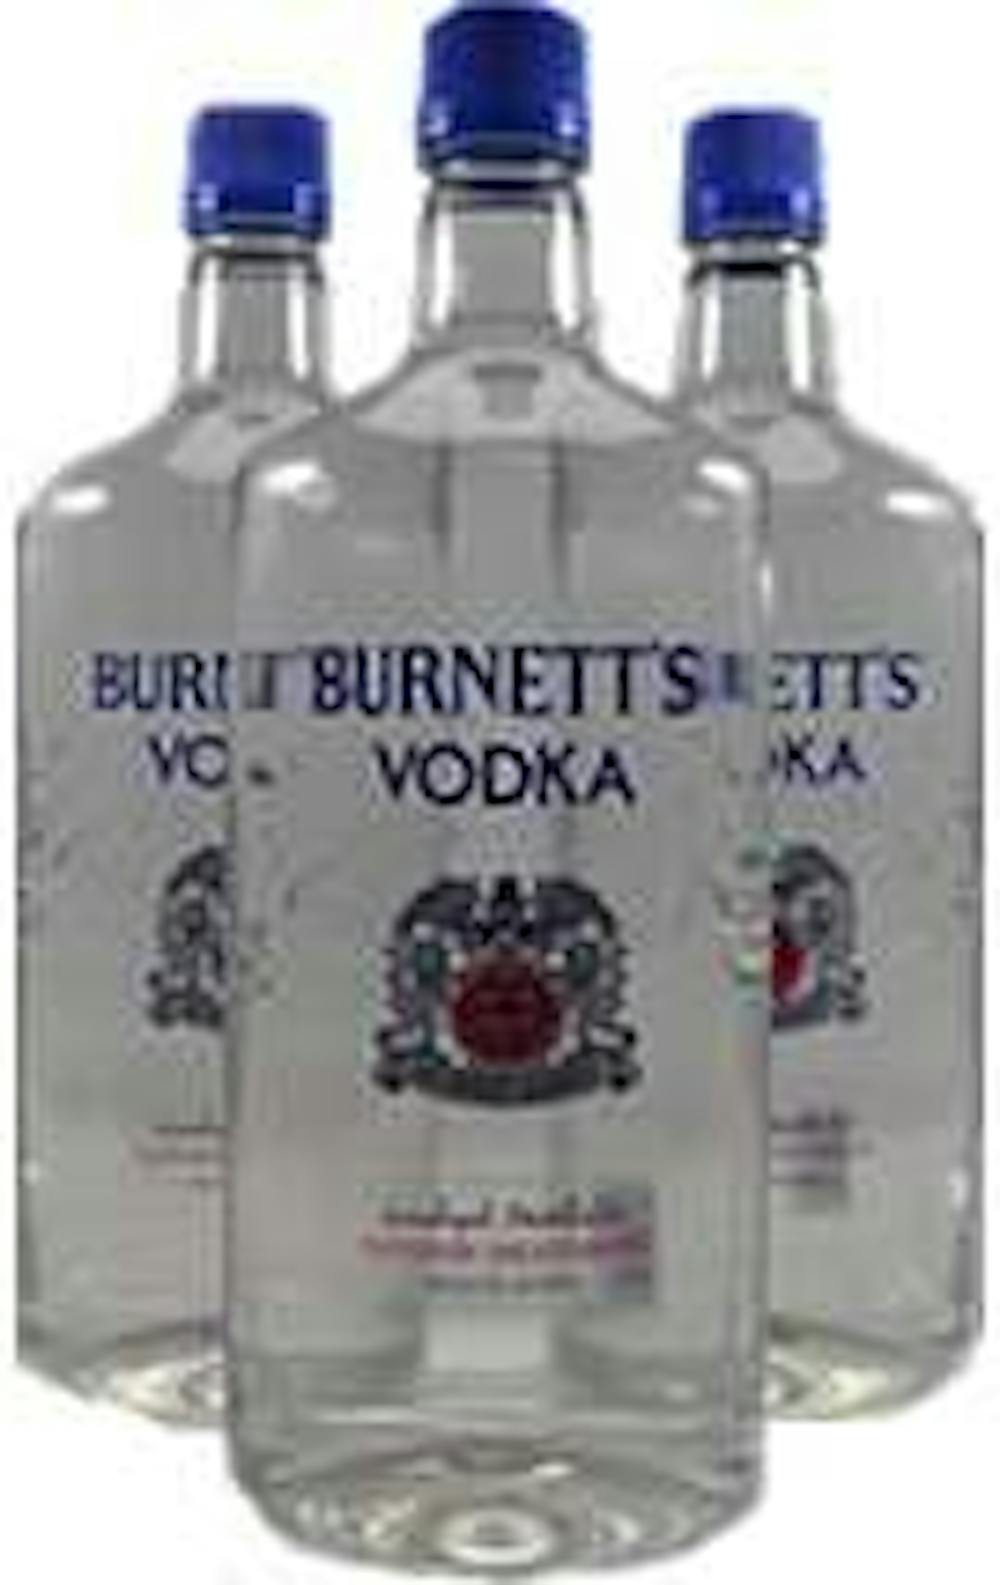 burnett-s-vodka